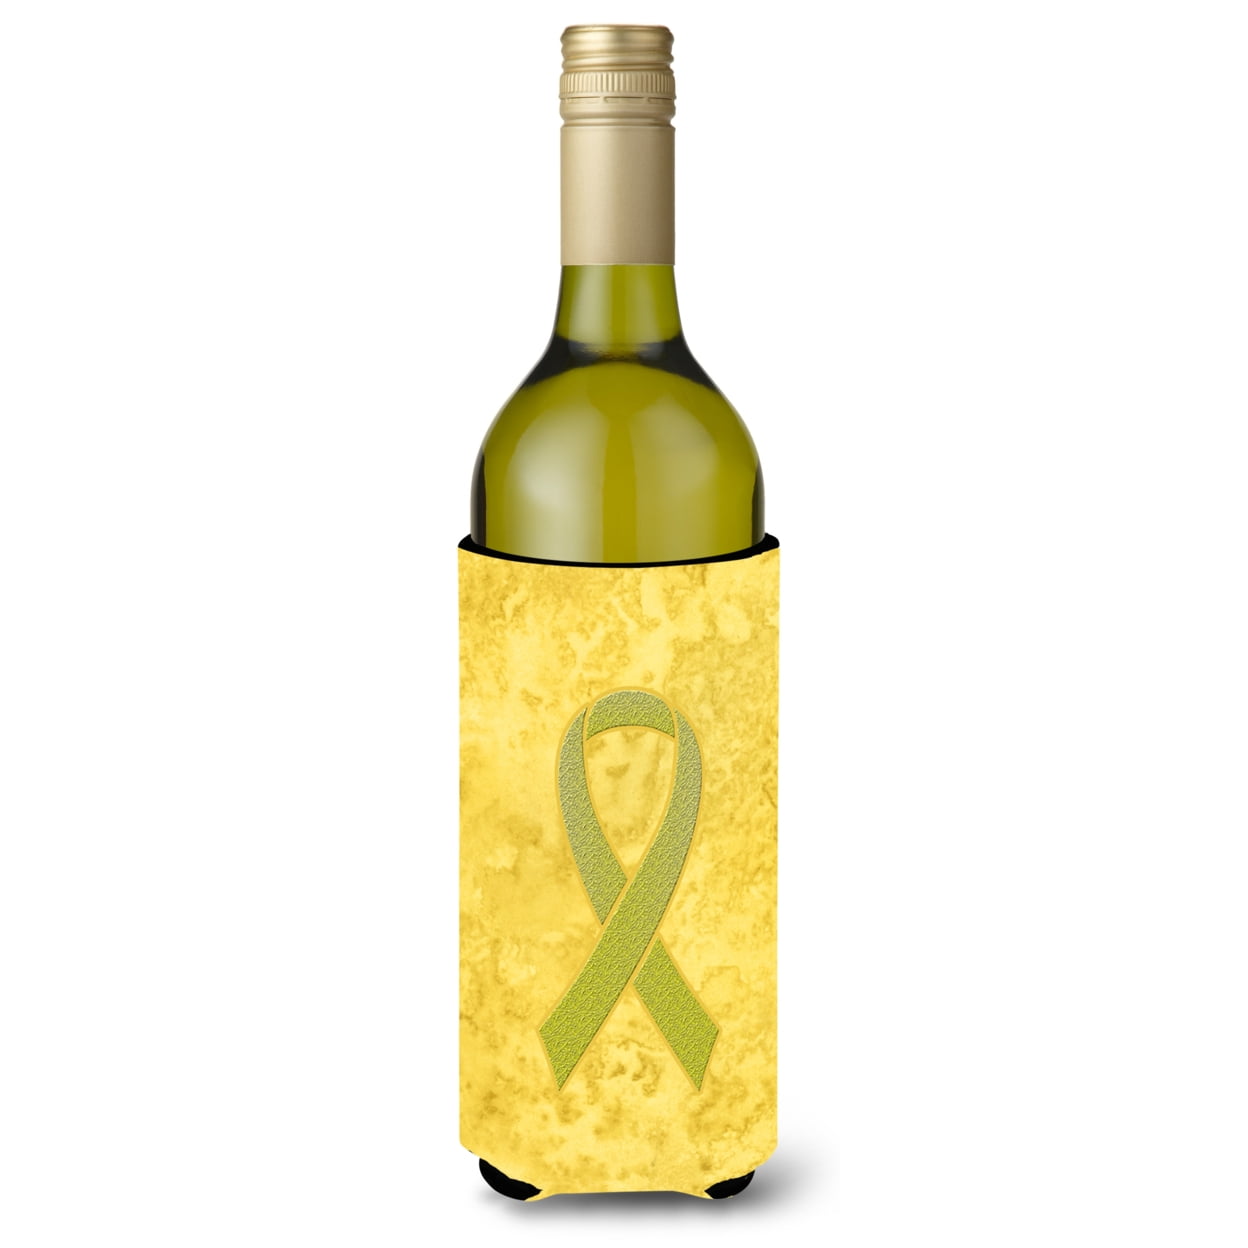 Burgundy Ribbon for Multiple Myeloma Cancer Awareness Can or Bottle Hugger AN1214CC